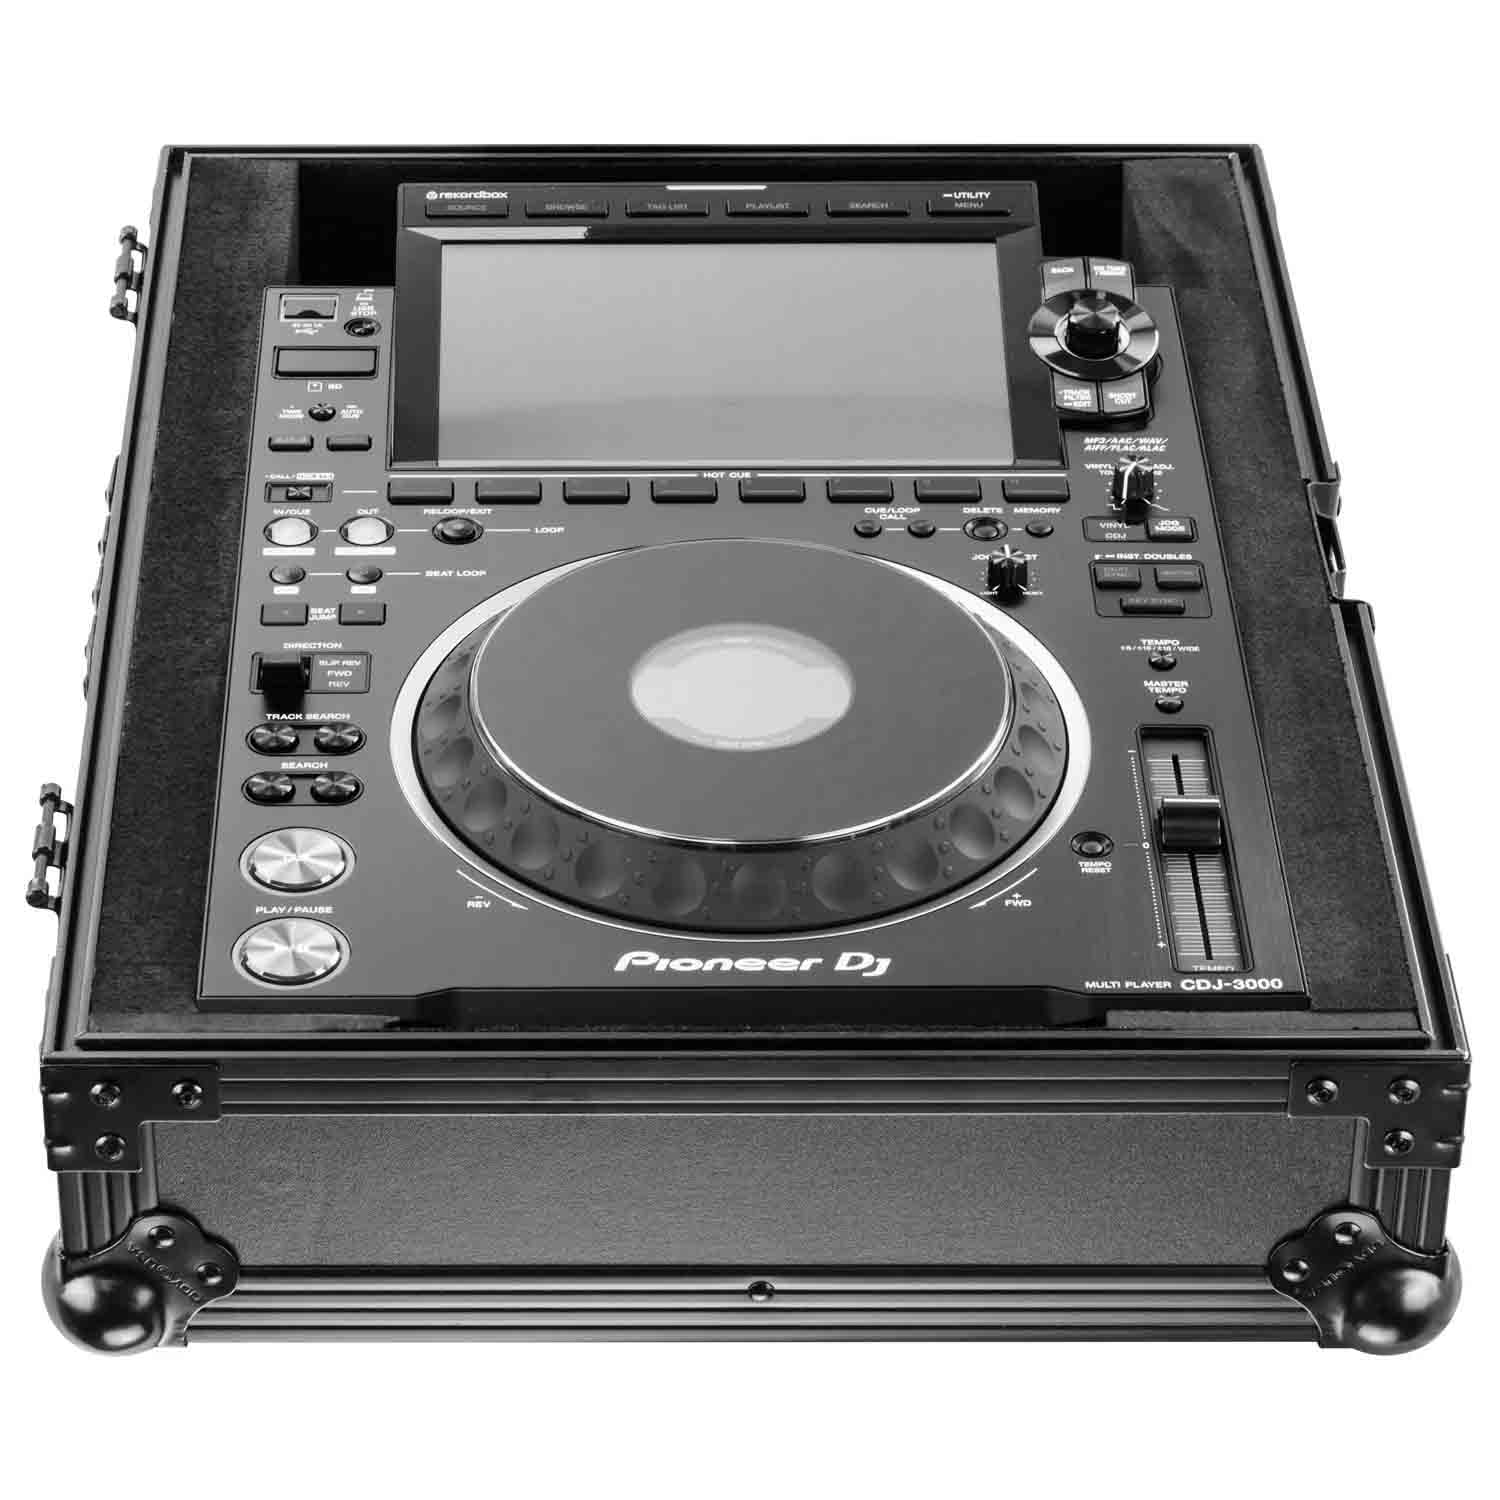 Odyssey FZCDJ3000BL Flight Case For Pioneer CDJ-3000 - Black - Hollywood DJ